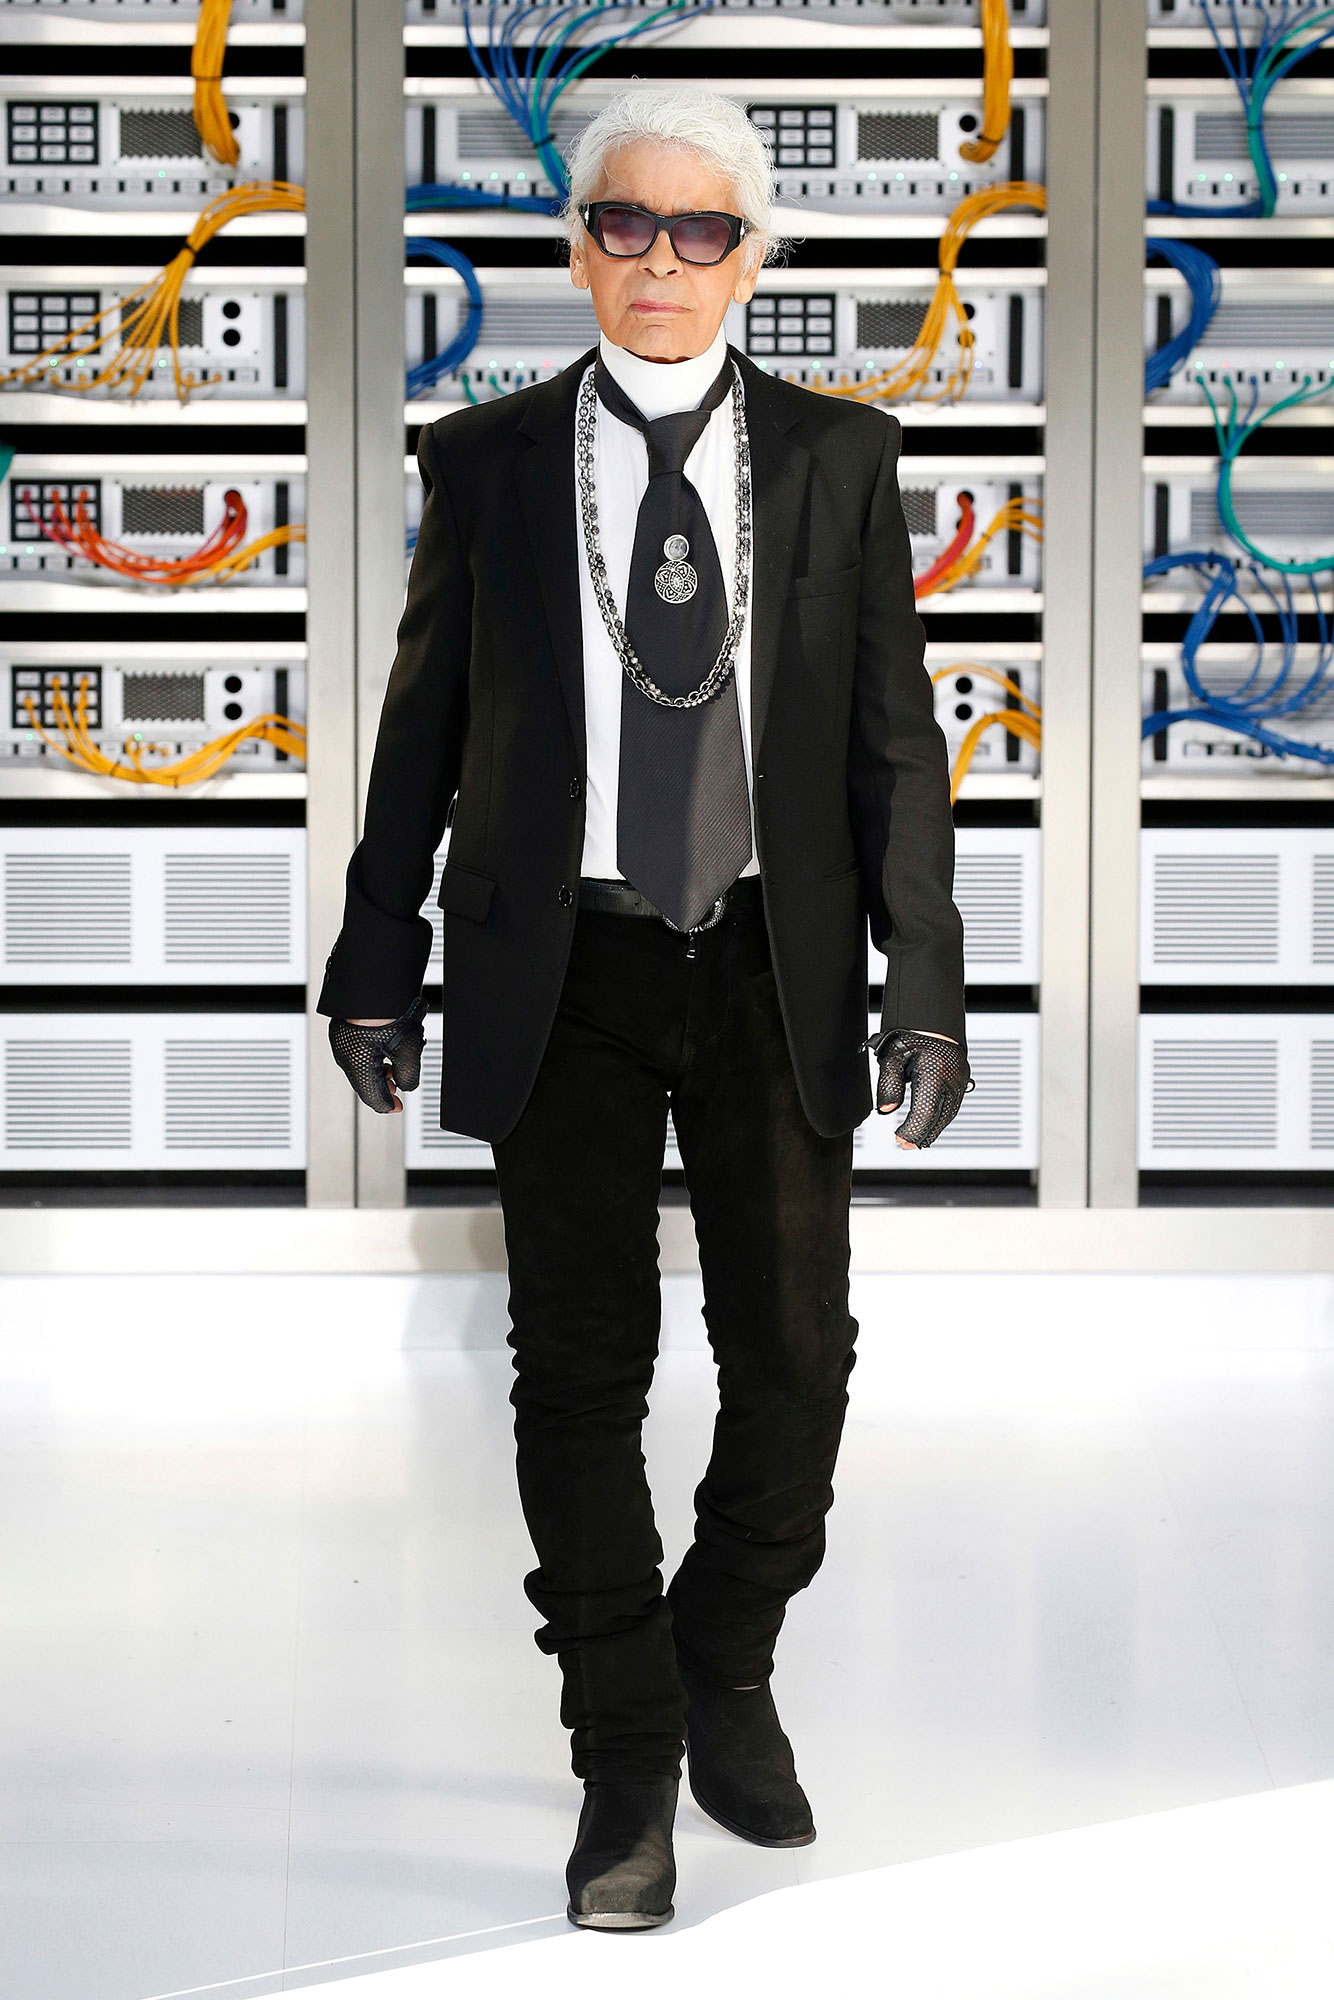 Karl Lagerfeld: A Line of Beauty:' Recap of the 2023 Met Gala